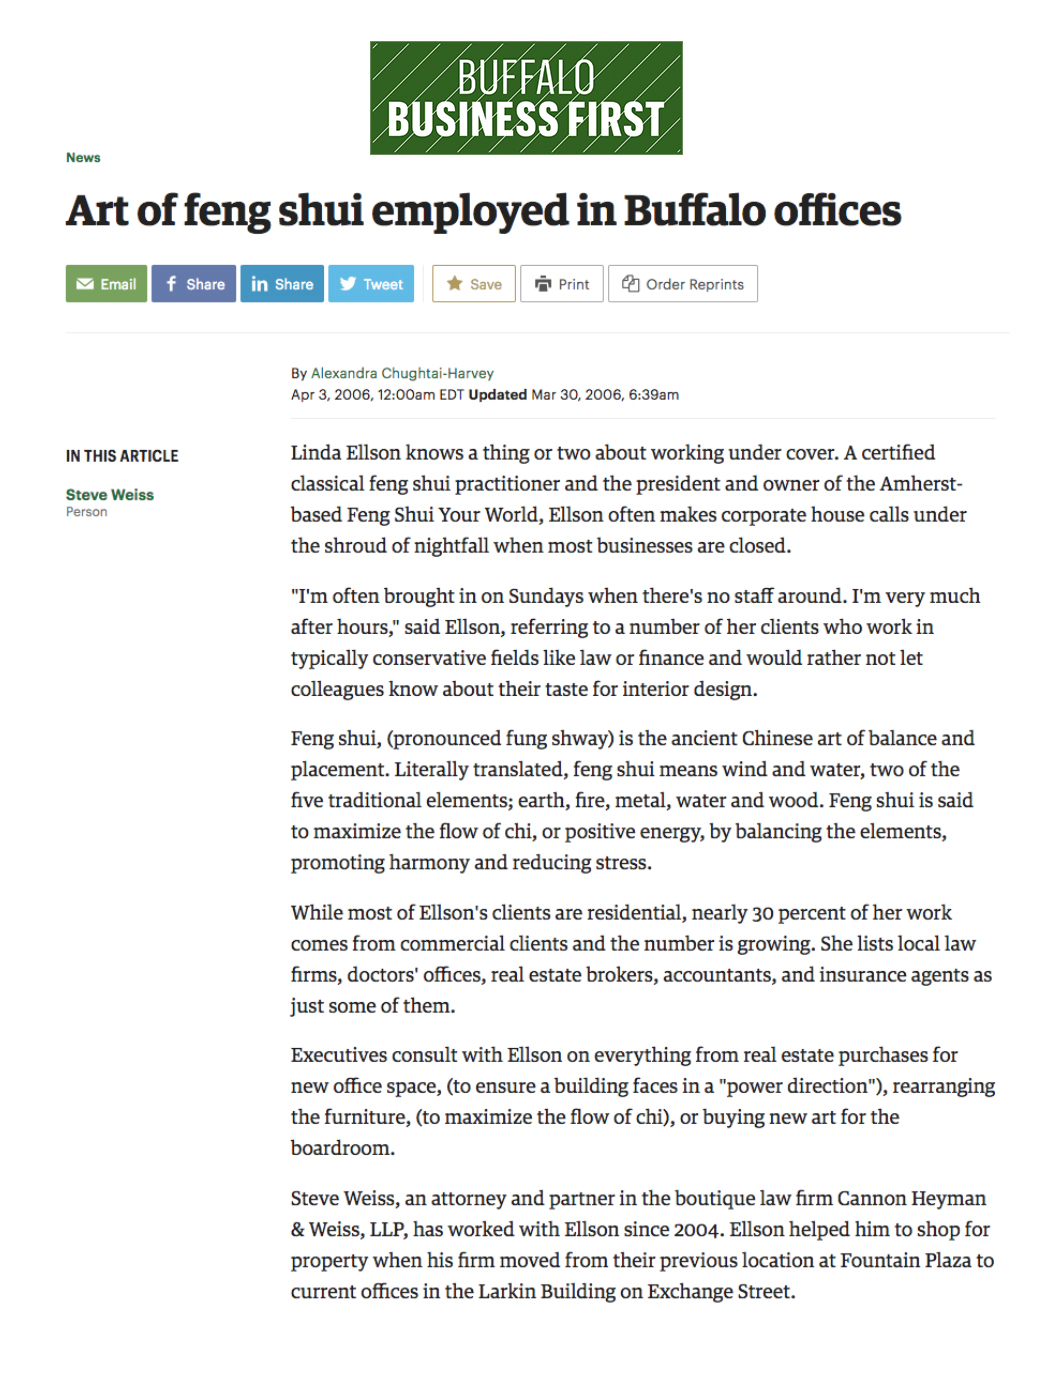 art of feng shui in buffalo offices